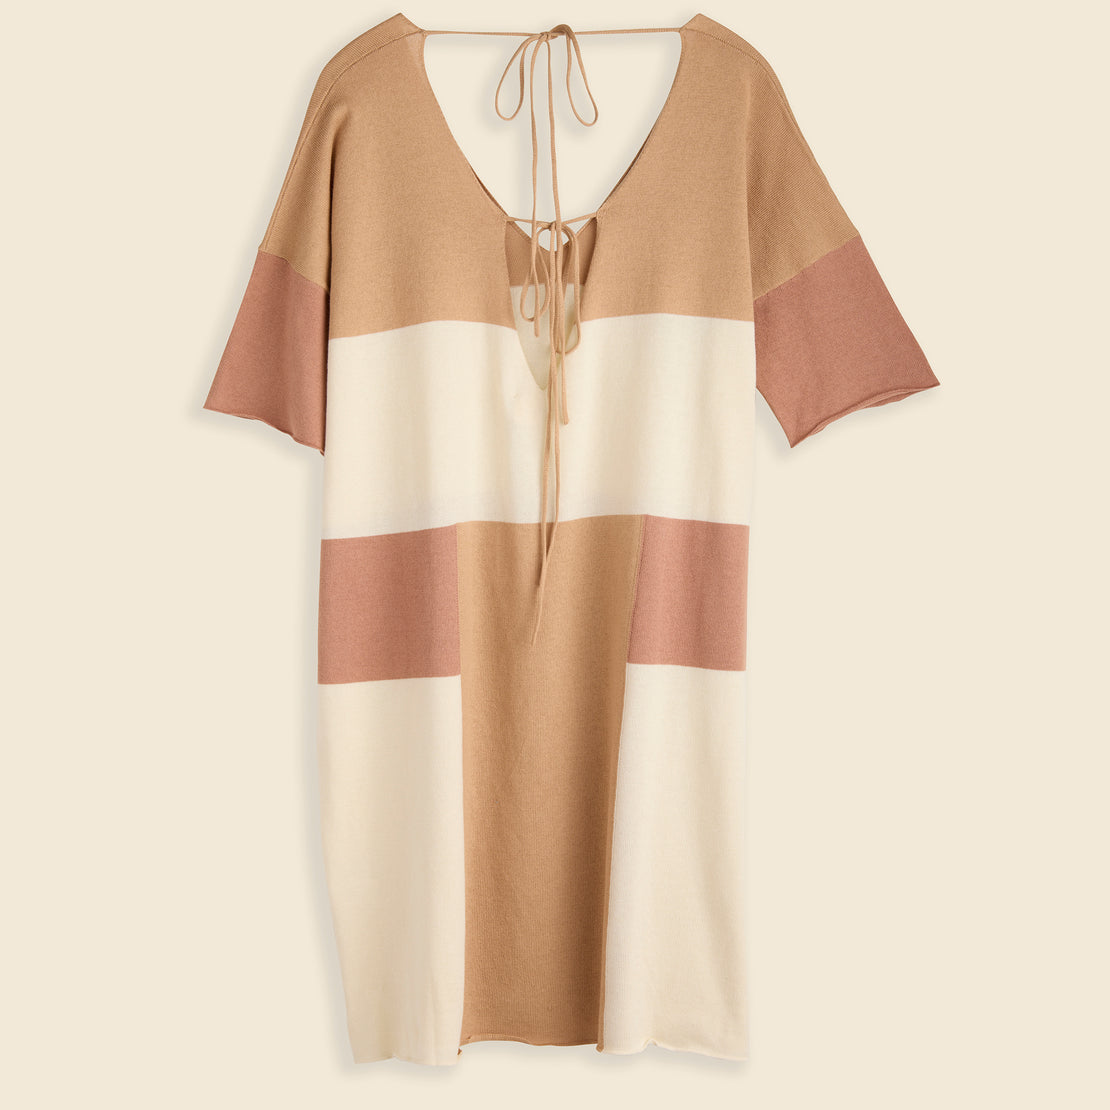 Laguna Tunic - Cream/Marron/Mauve - Atelier Delphine - STAG Provisions - W - Onepiece - Dress